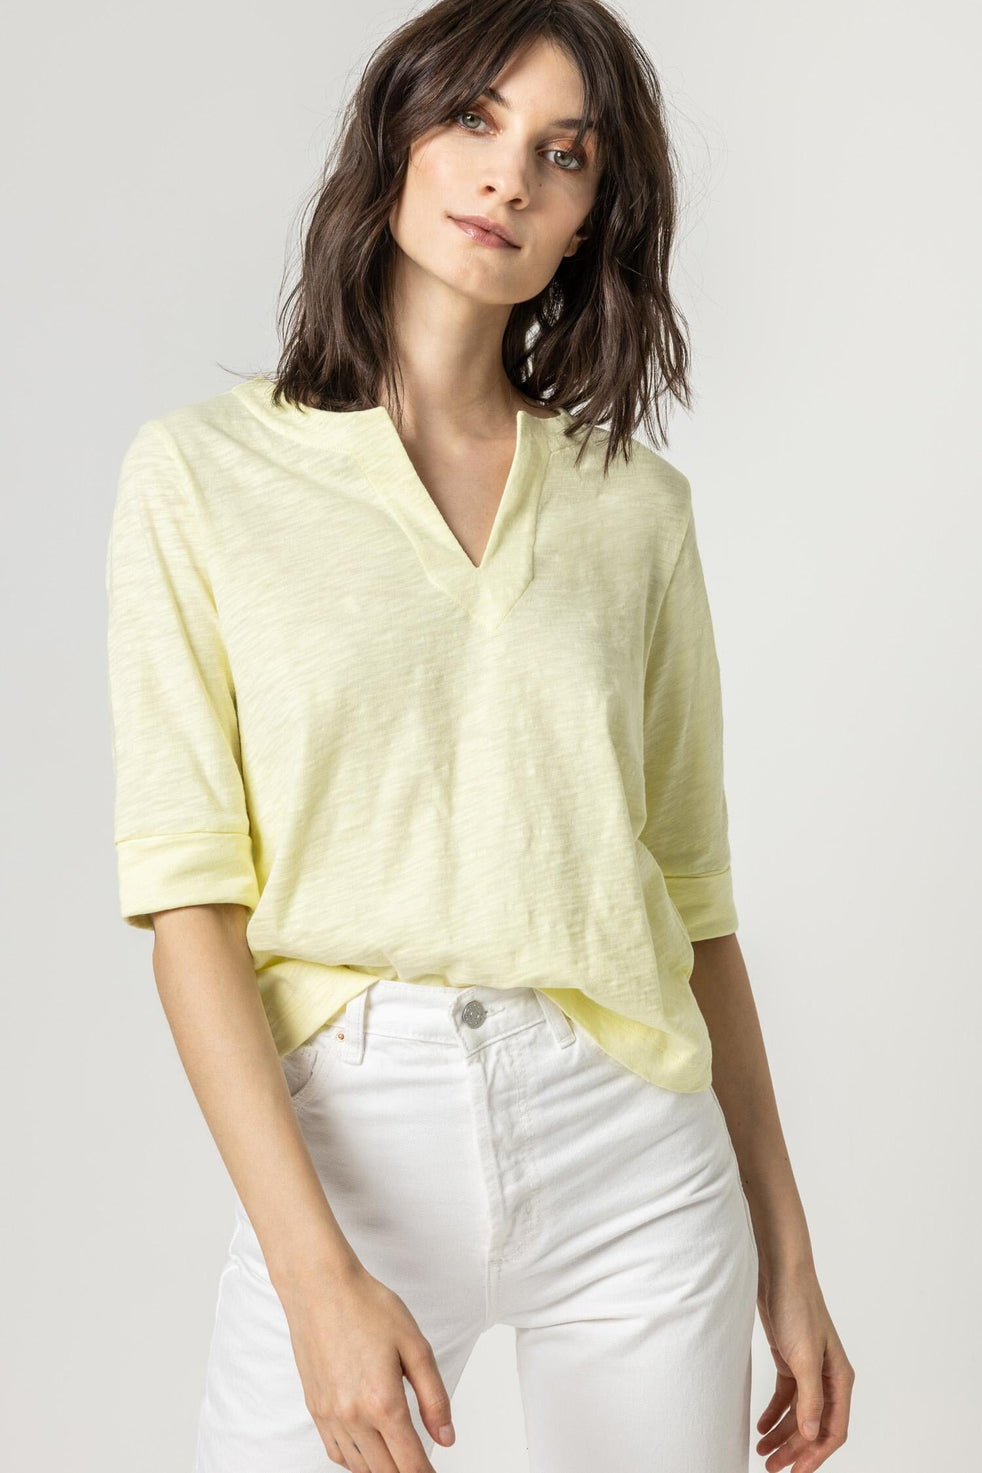 Women Sale for Cotton & | on Sleeve Long Shirts Women\'s Tops Short